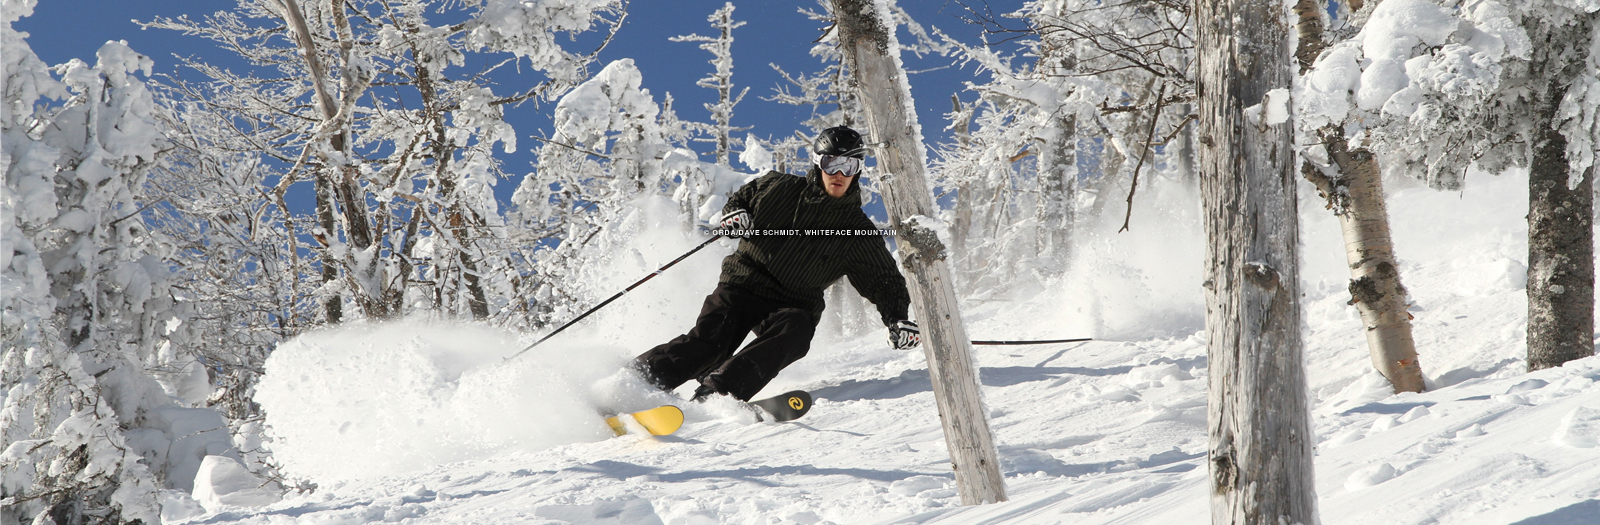 Whiteface Mountain | Ski Resort Near NYC